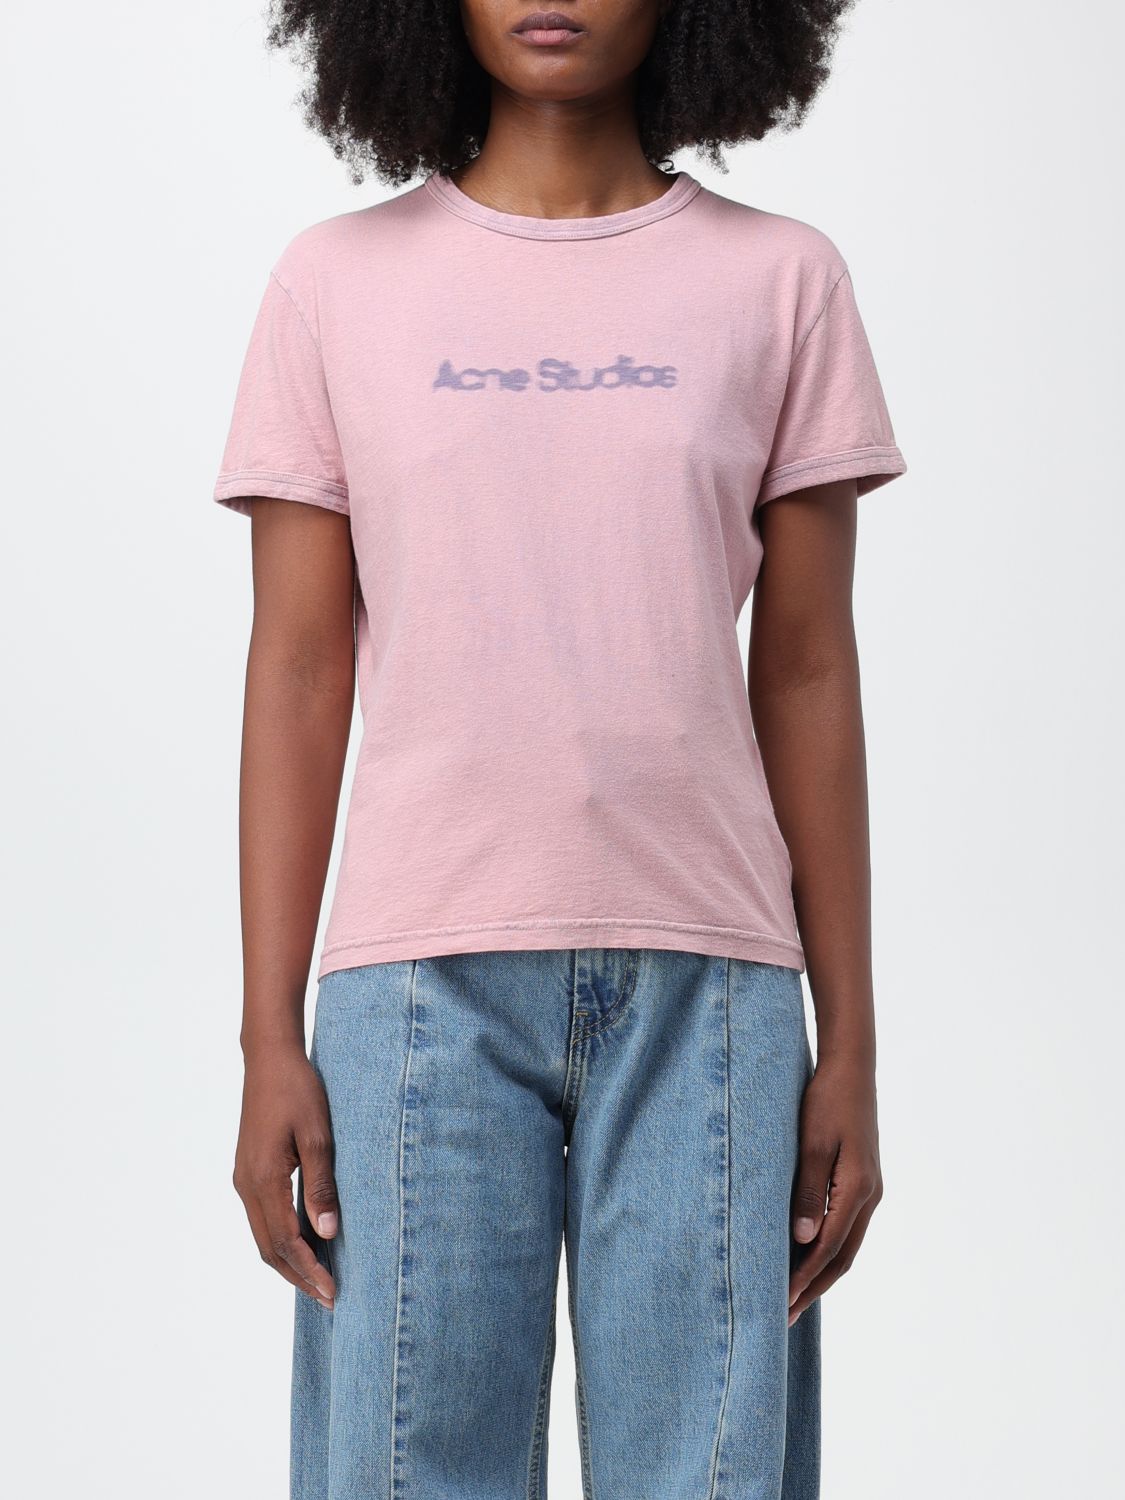 Acne Studios t-shirt for woman